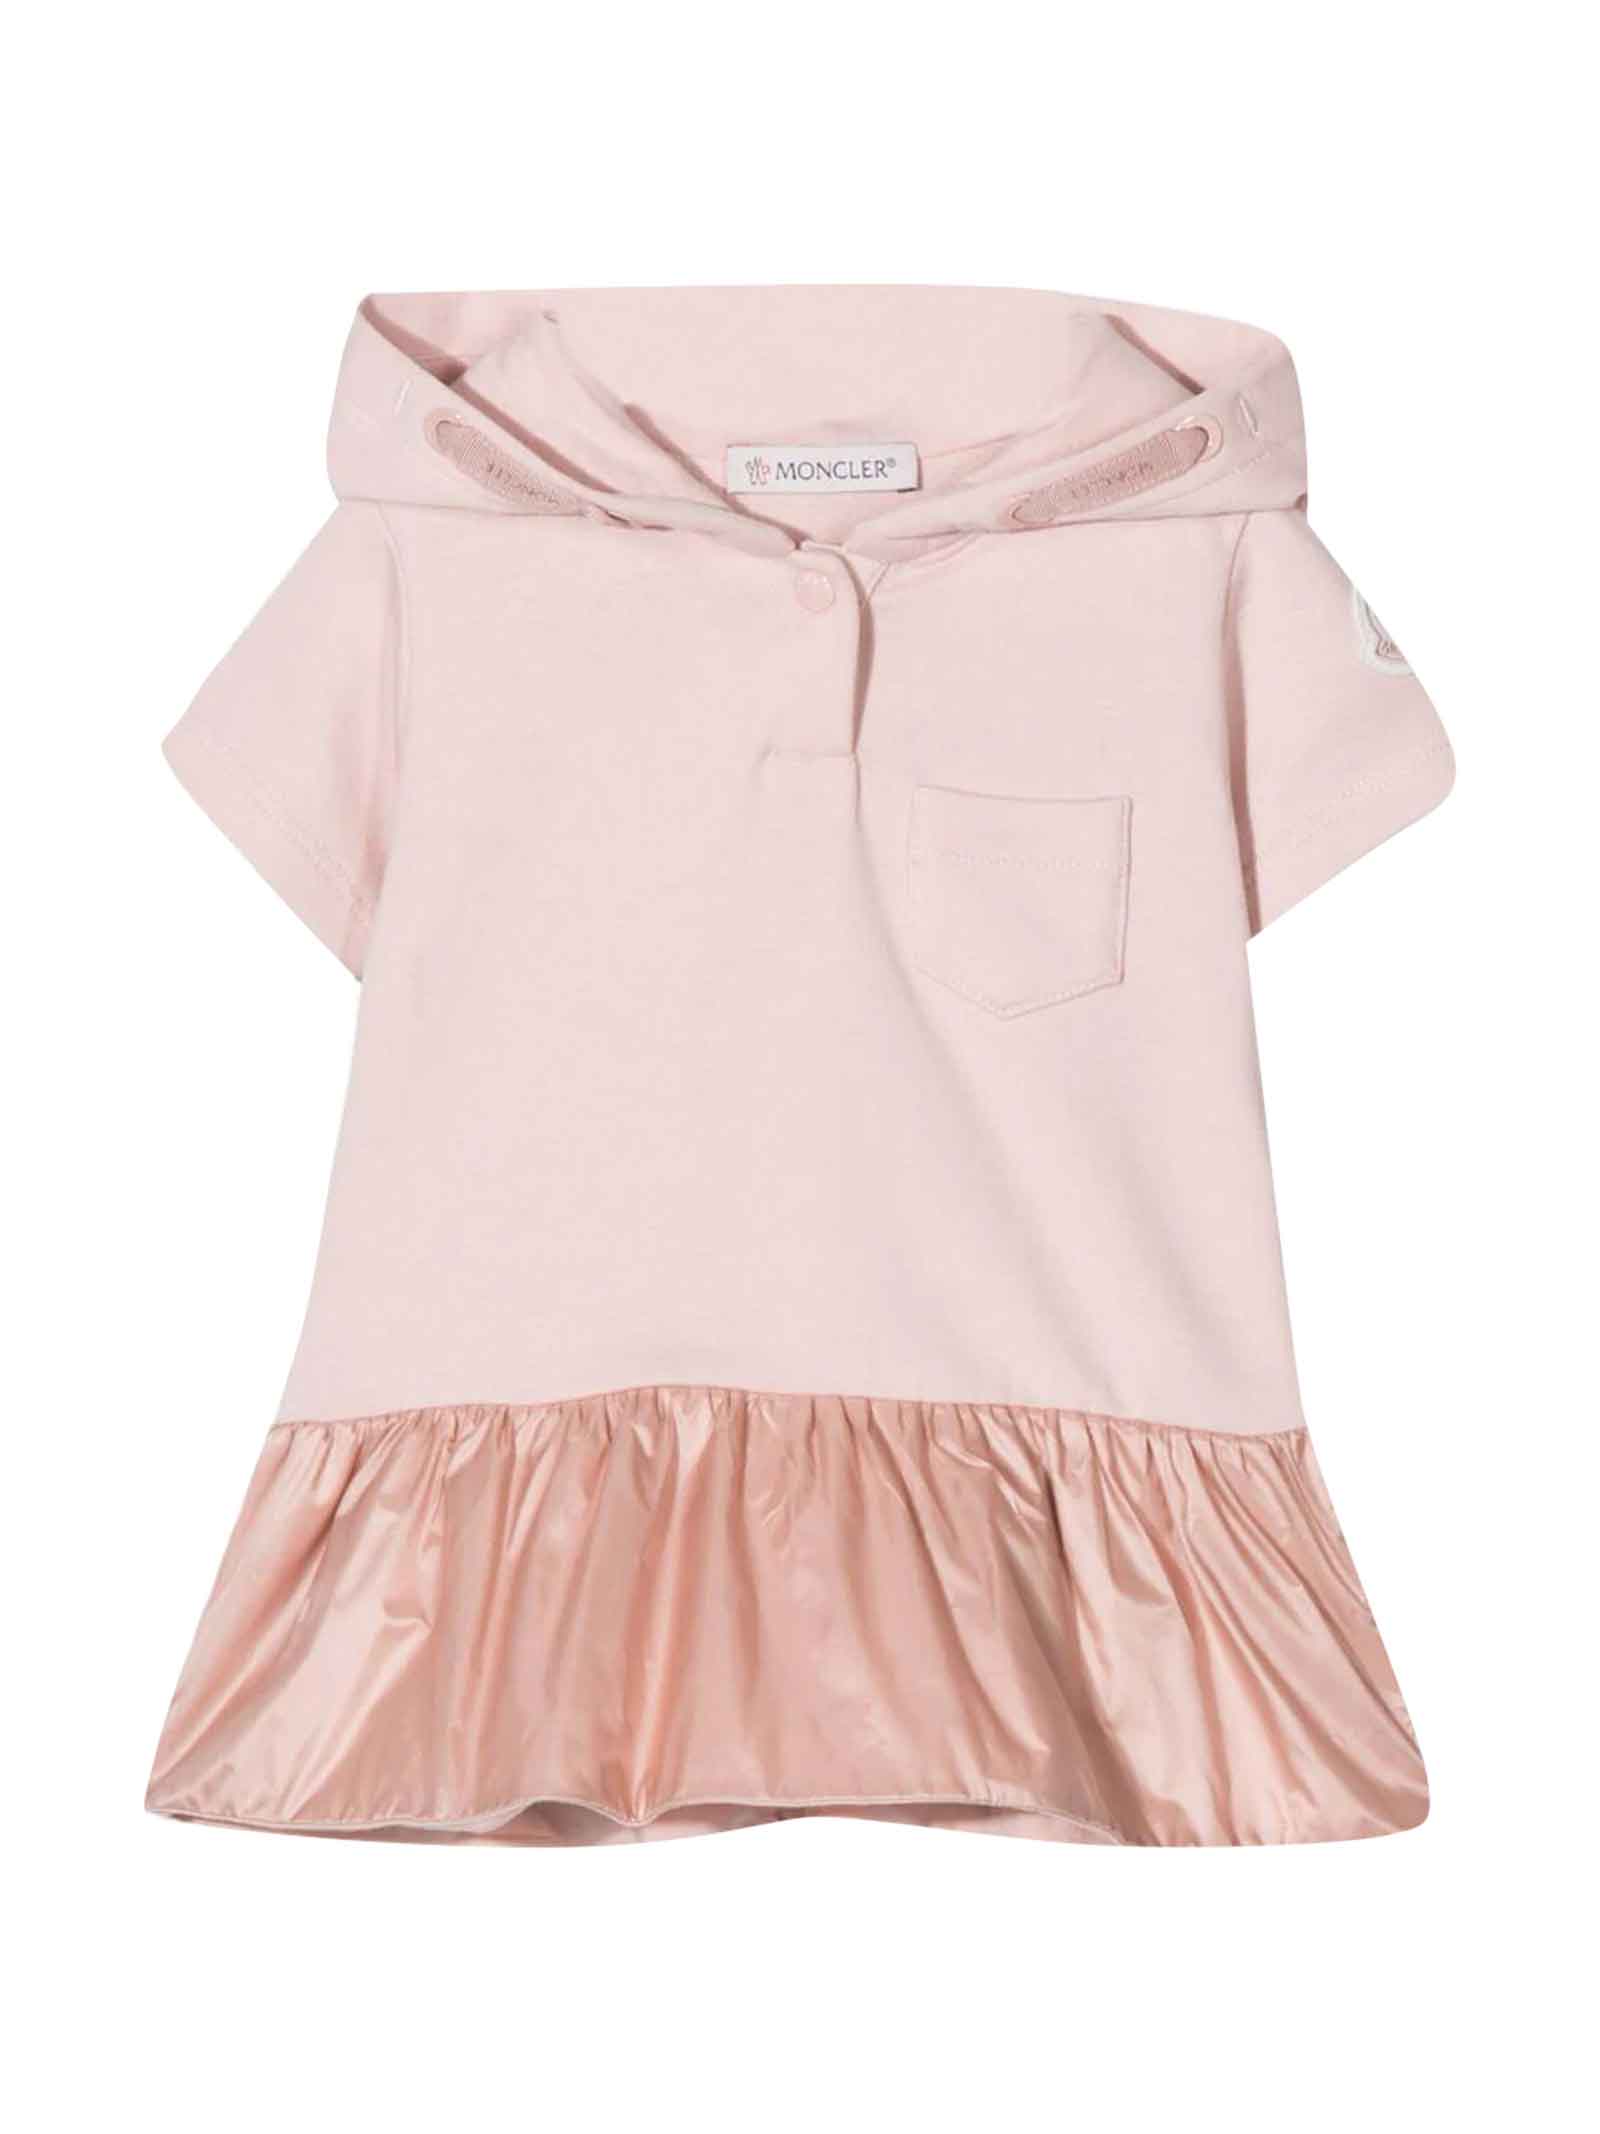 Moncler Baby Girl Pink Dress